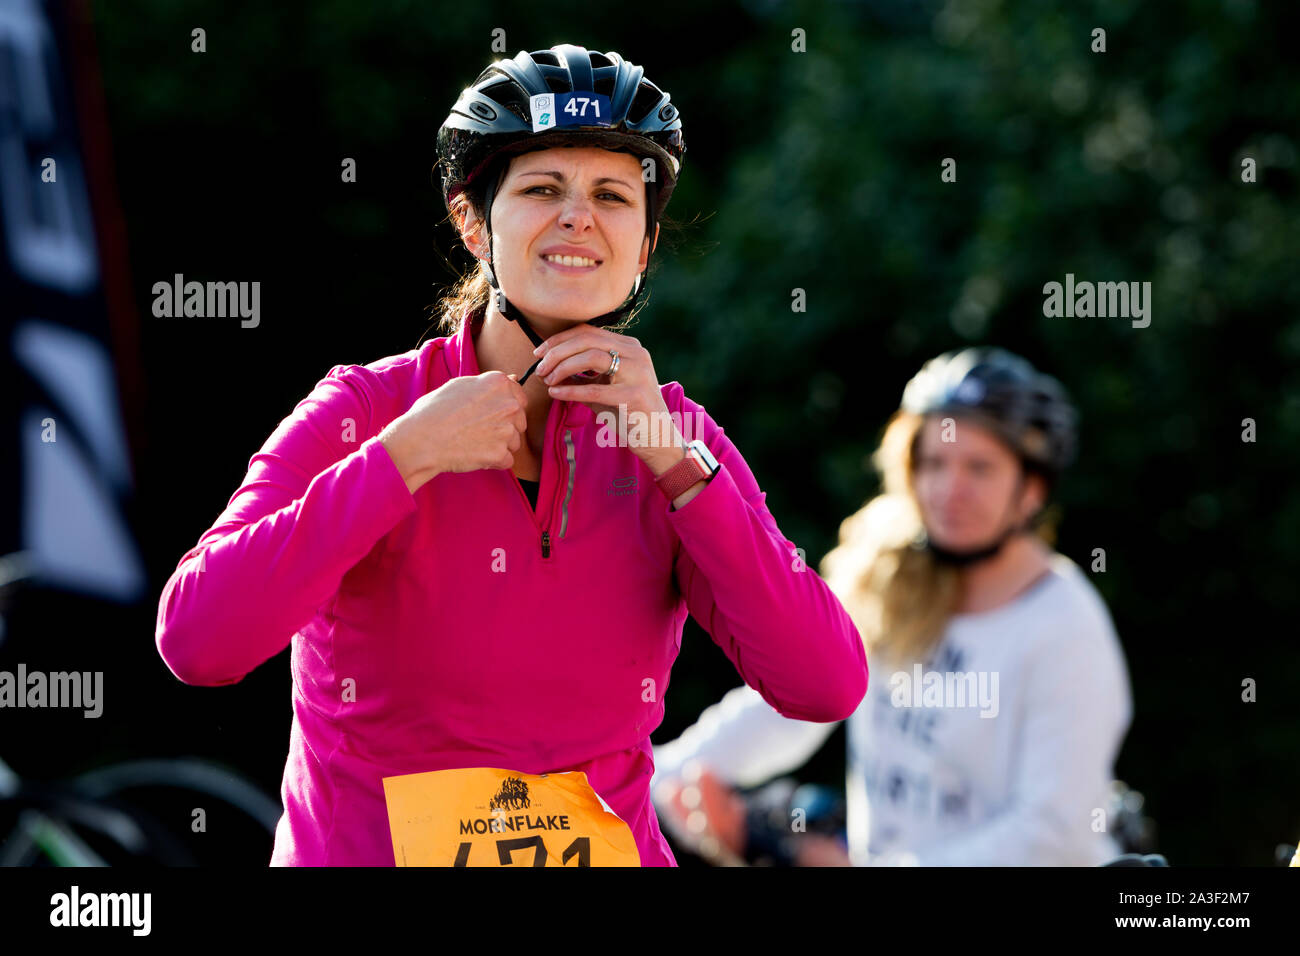 A triathlete removing her cycling helmet, Warwickshire Triathlon, UK Stock Photo